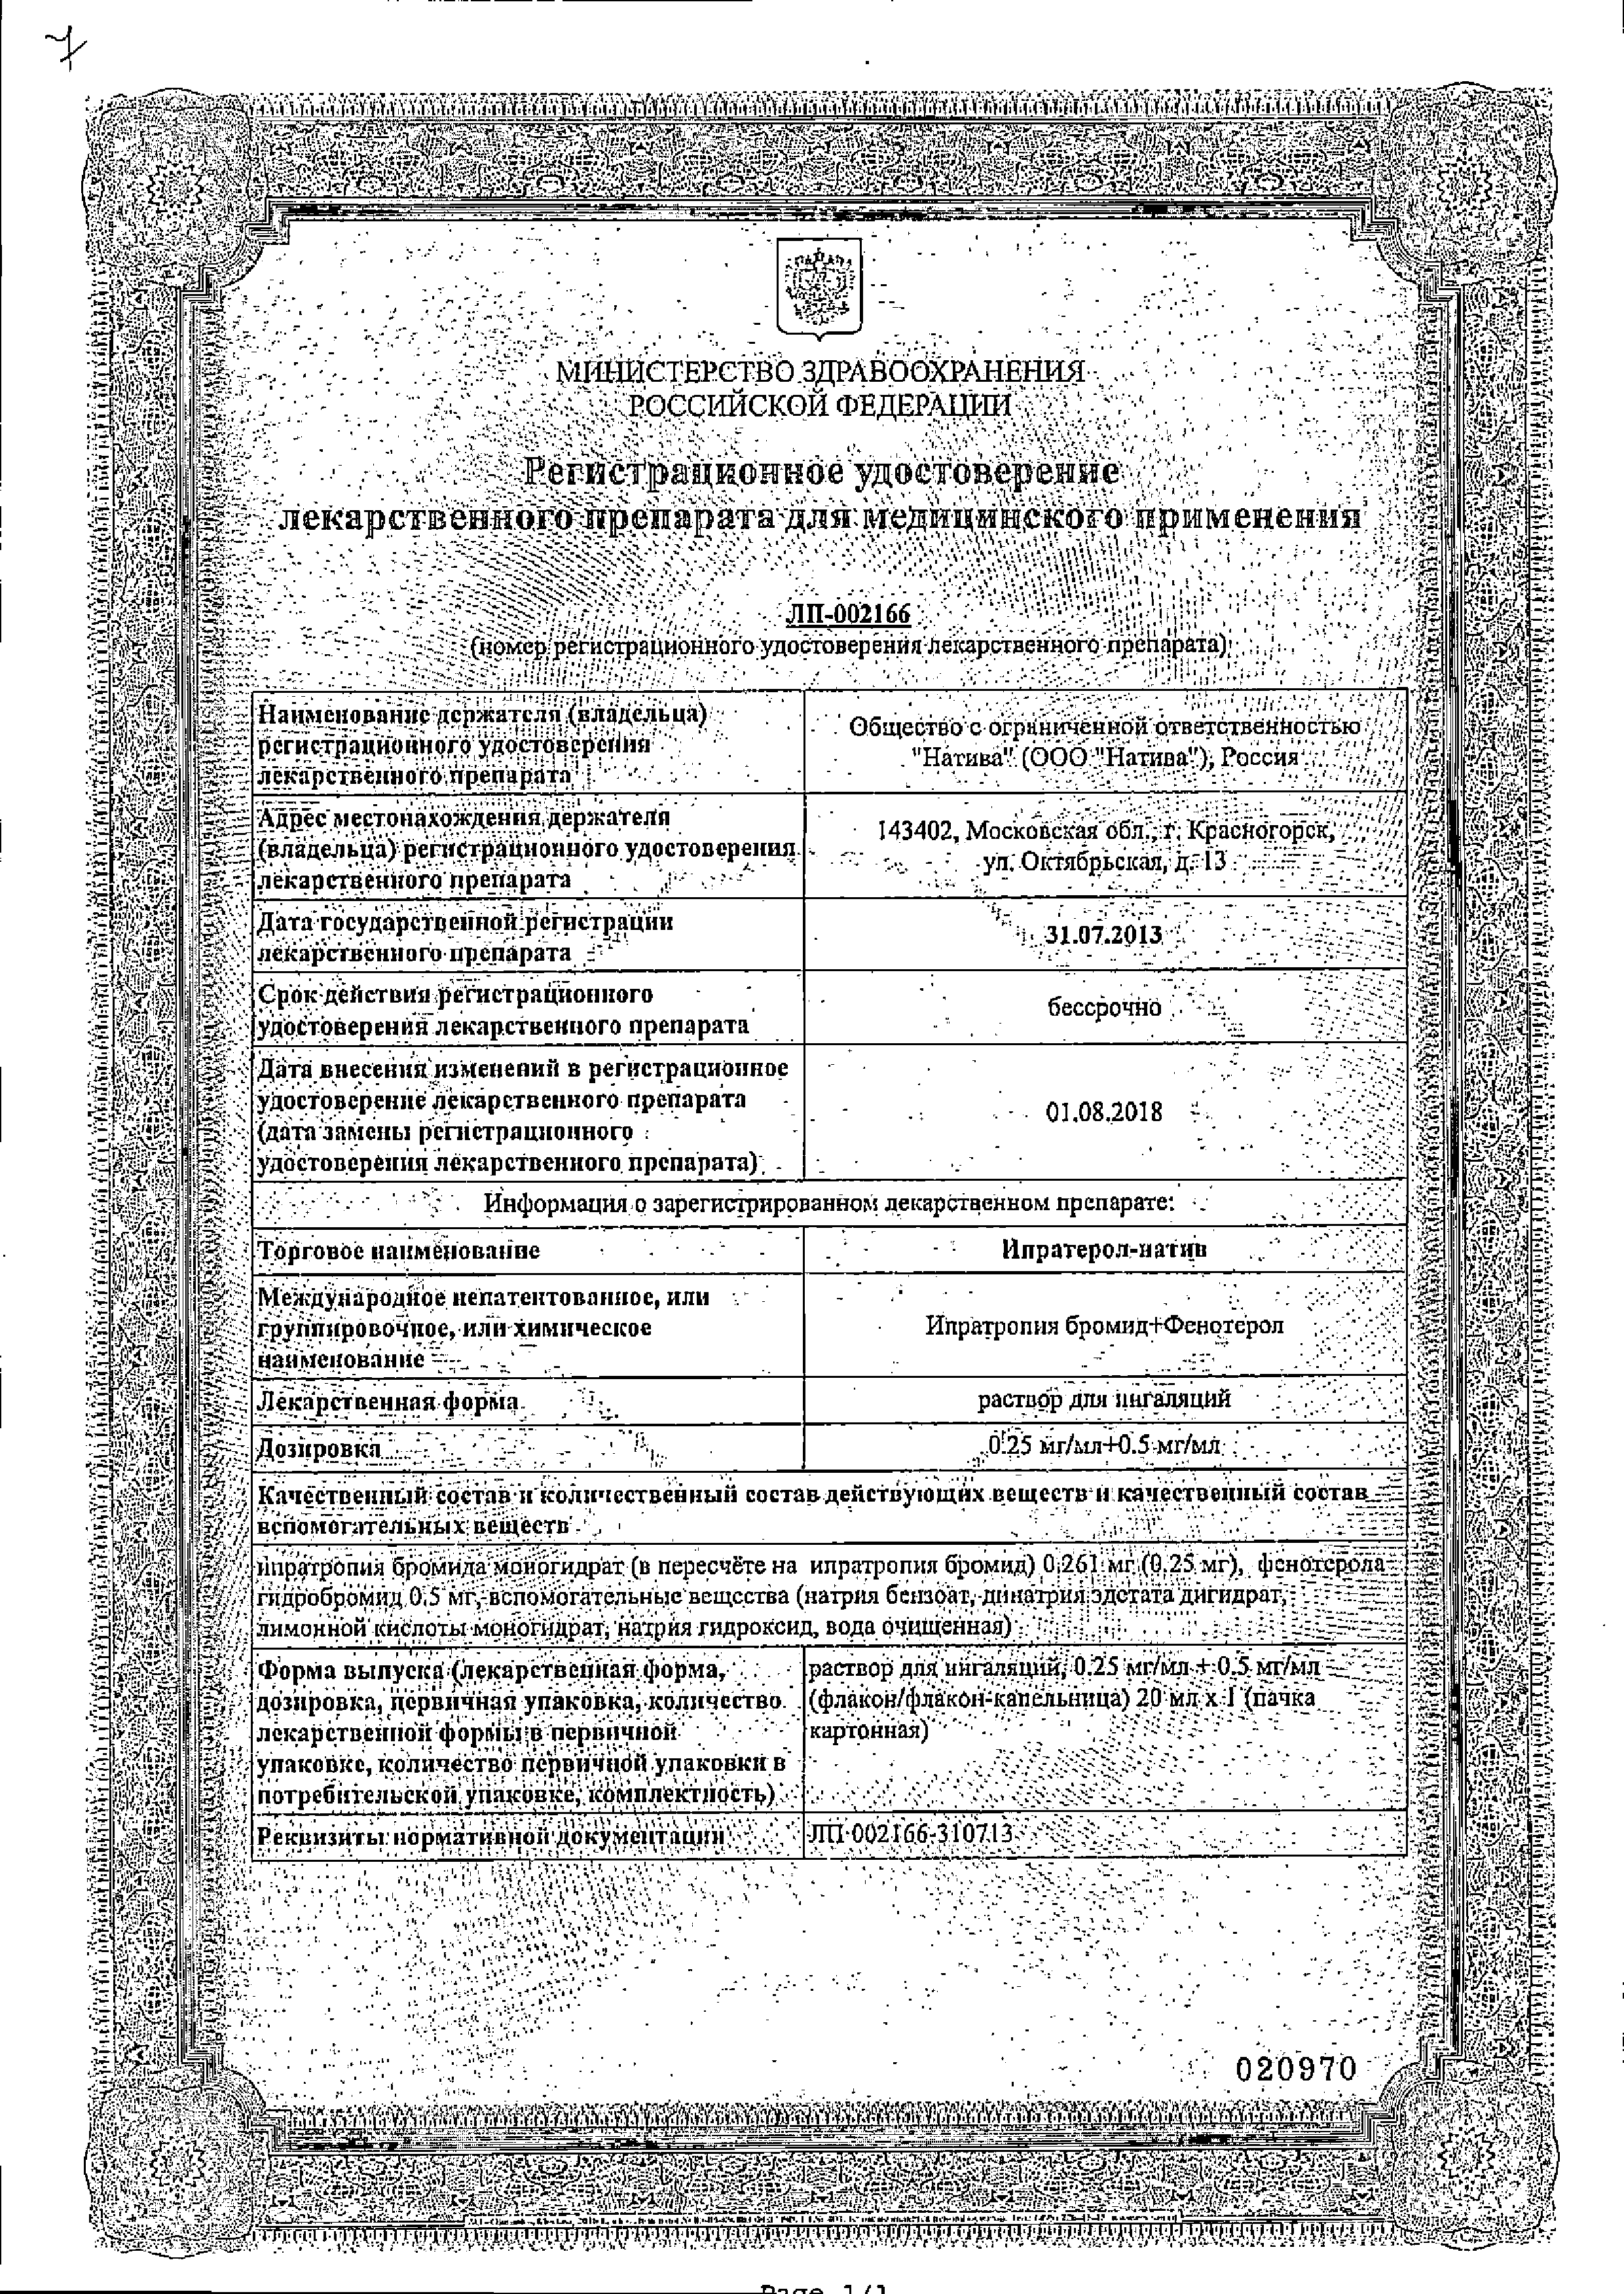 Ипратерол-натив сертификат